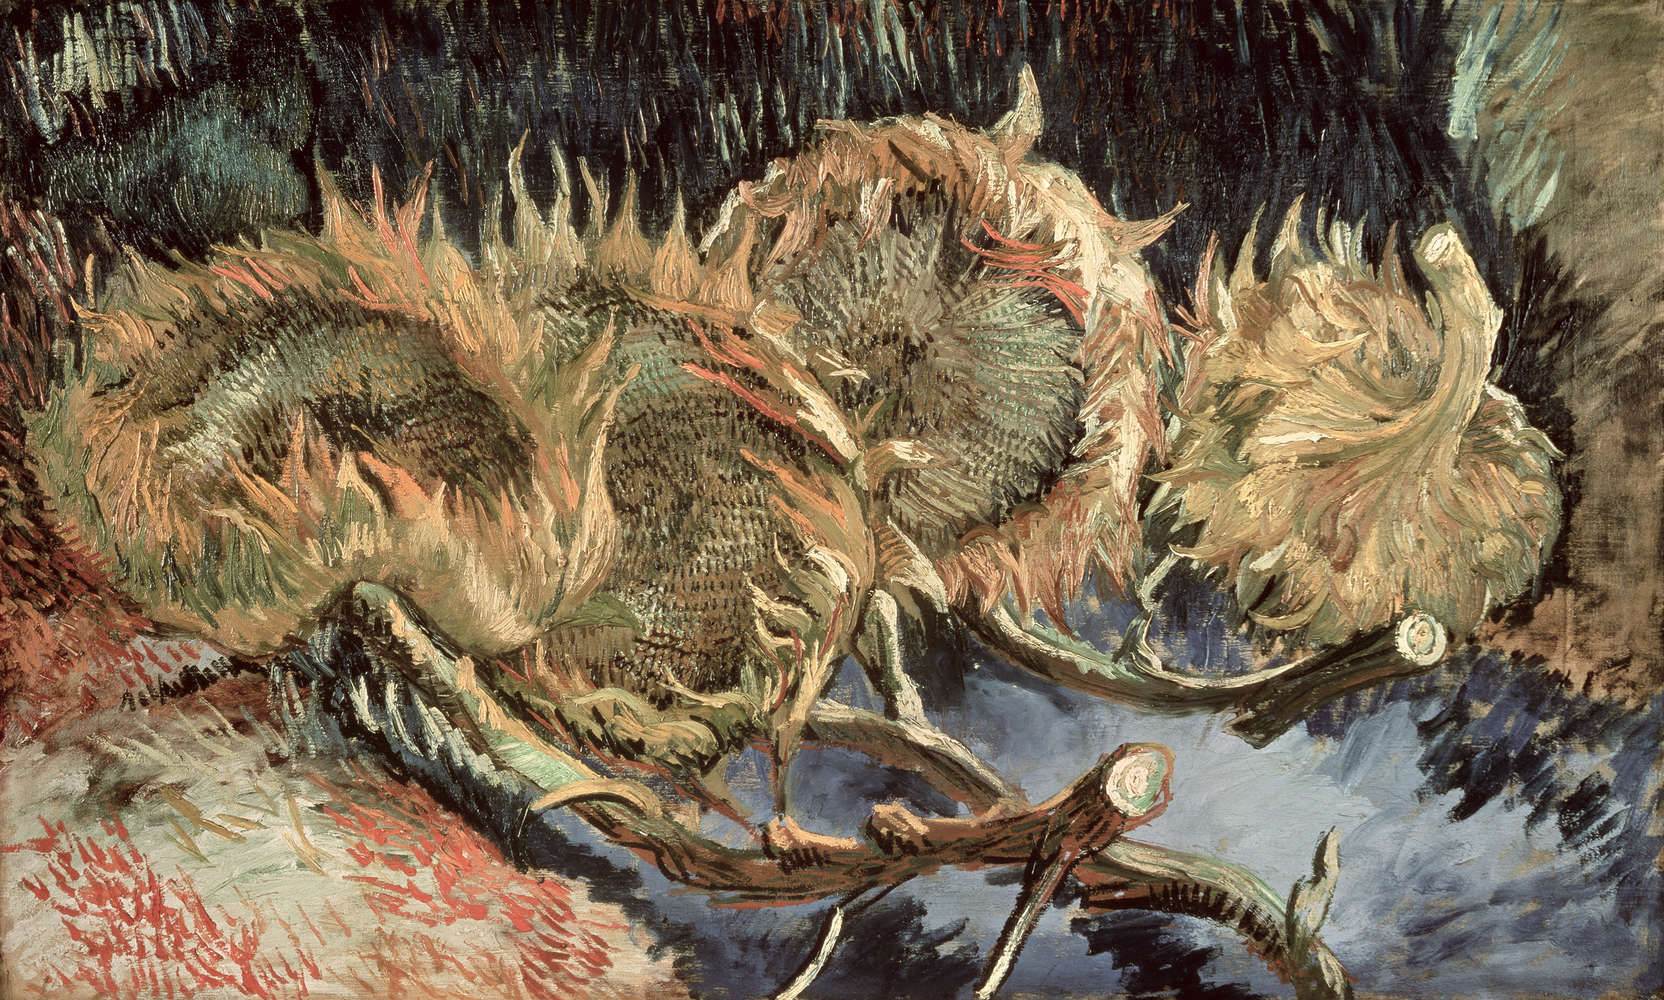             Quattro girasoli appassiti", murale di Vincent van Gogh
        